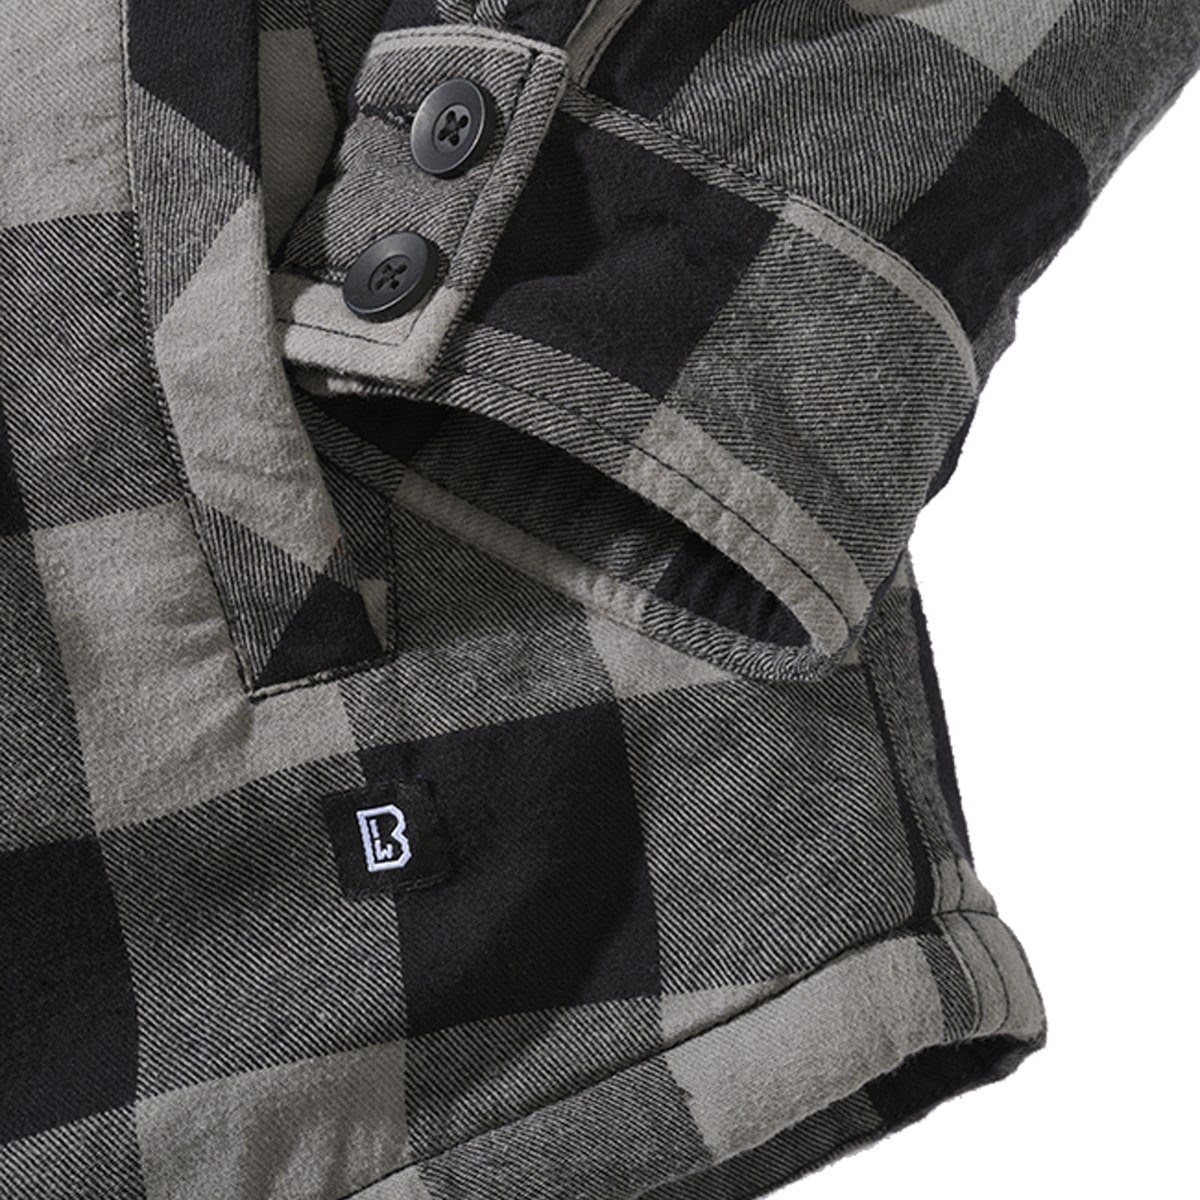 Lumber Shirt Outdoorjacke Brandit Brandit Hooded Check Charcoal-Schwarz